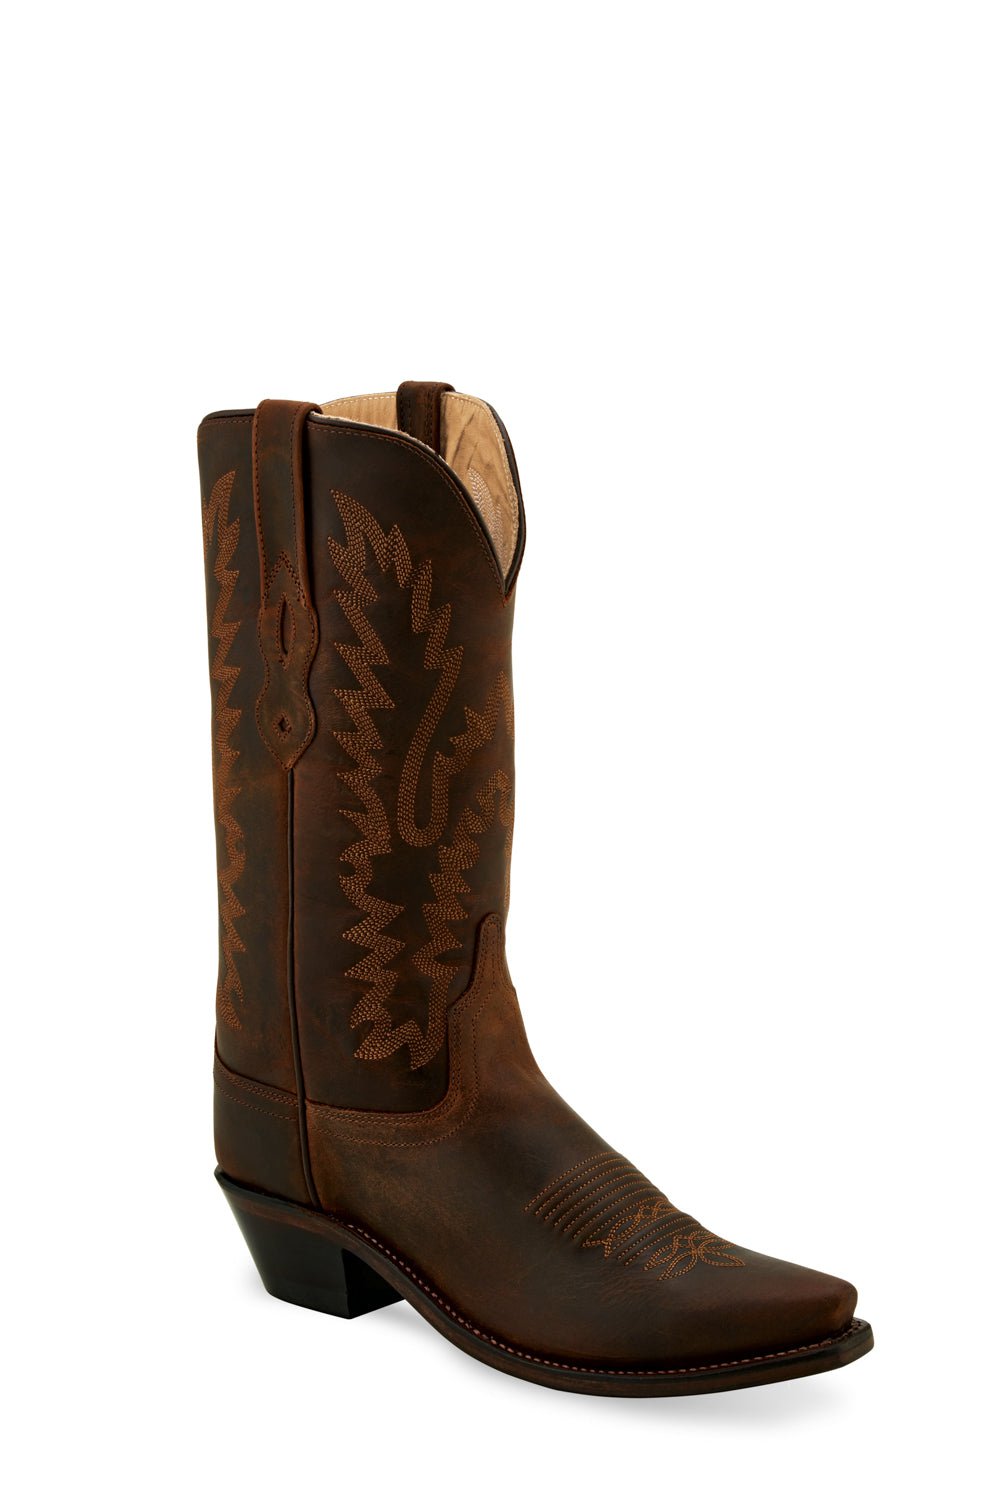 cool womens cowboy boots